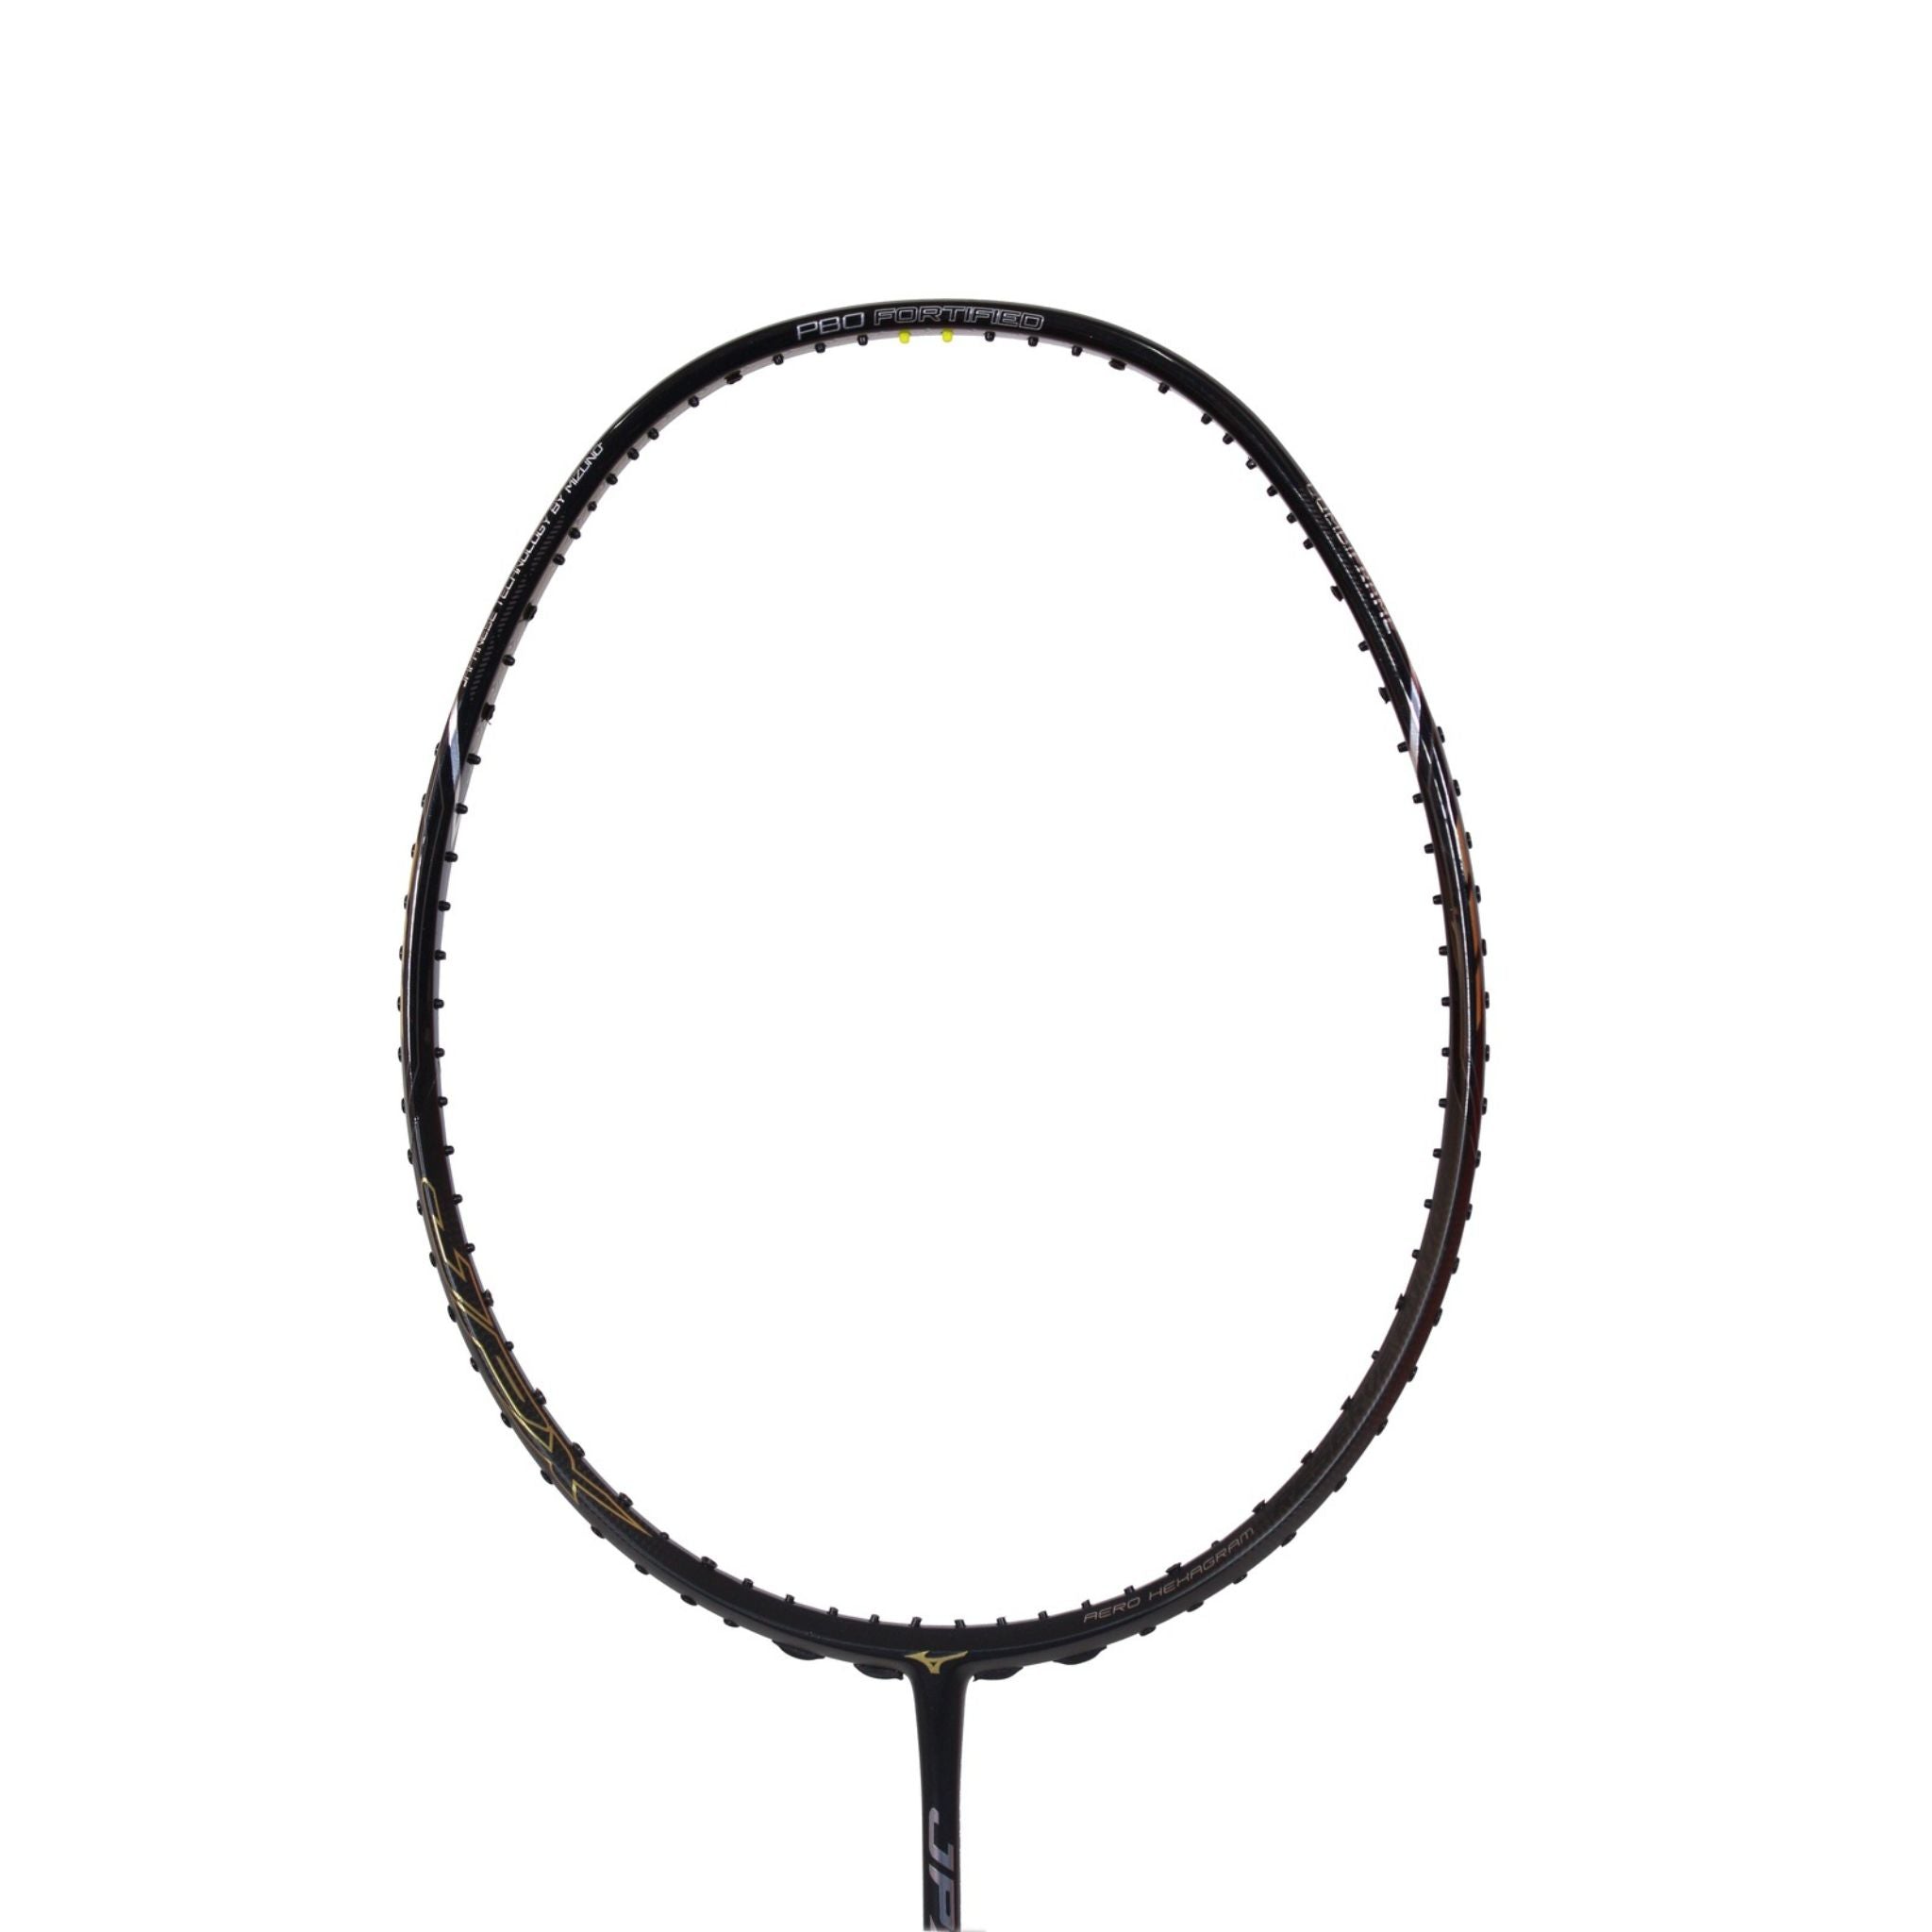 Mizuno JPX Reserves Edition Badminton Racket- With KitBagMizuno JPX Reserves Edition Badminton Racket- With KitBag